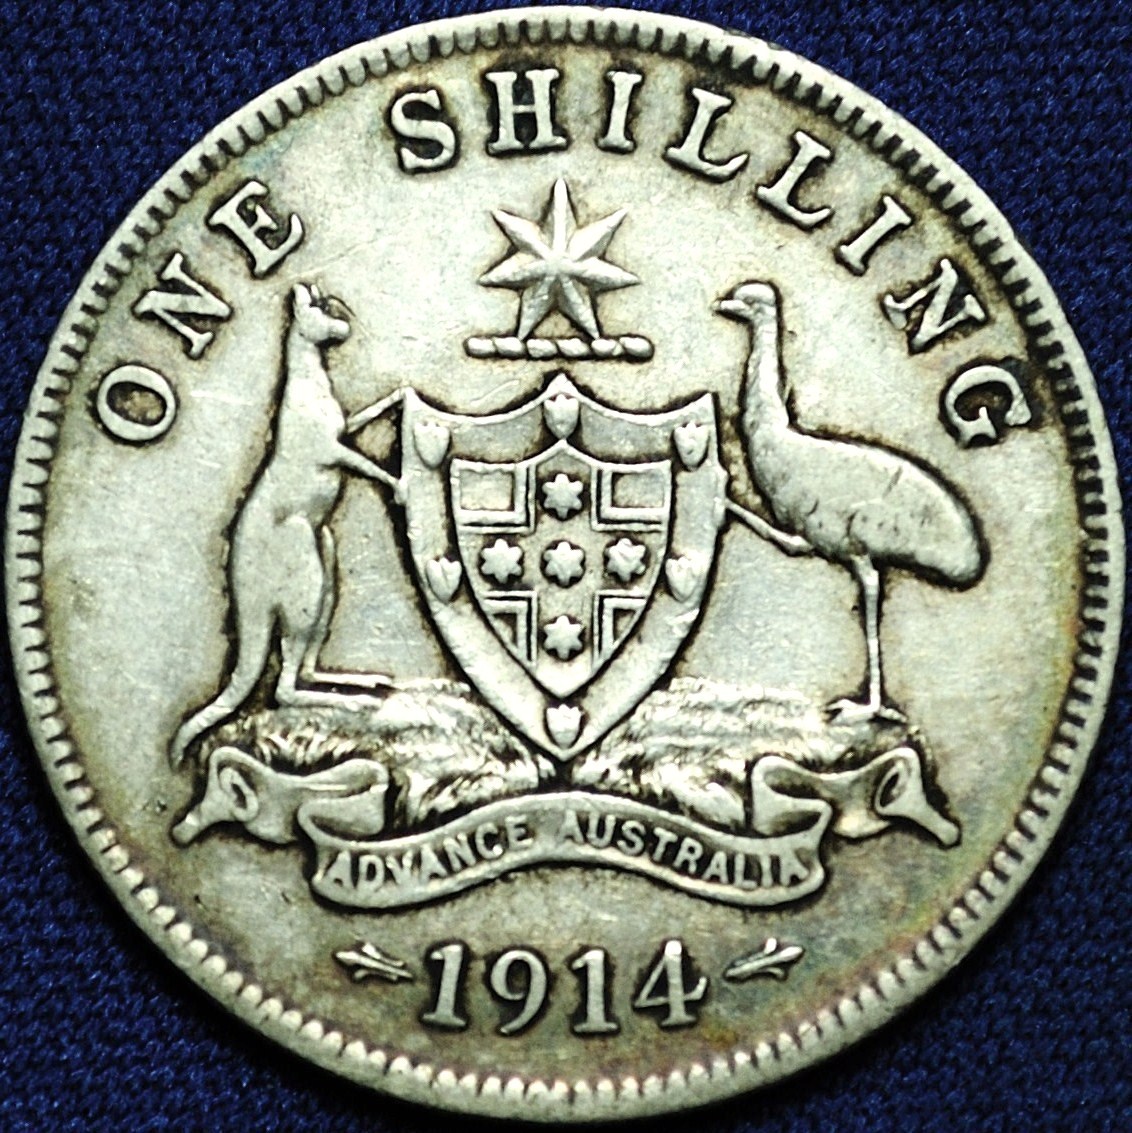 1914 Australian shilling reverse